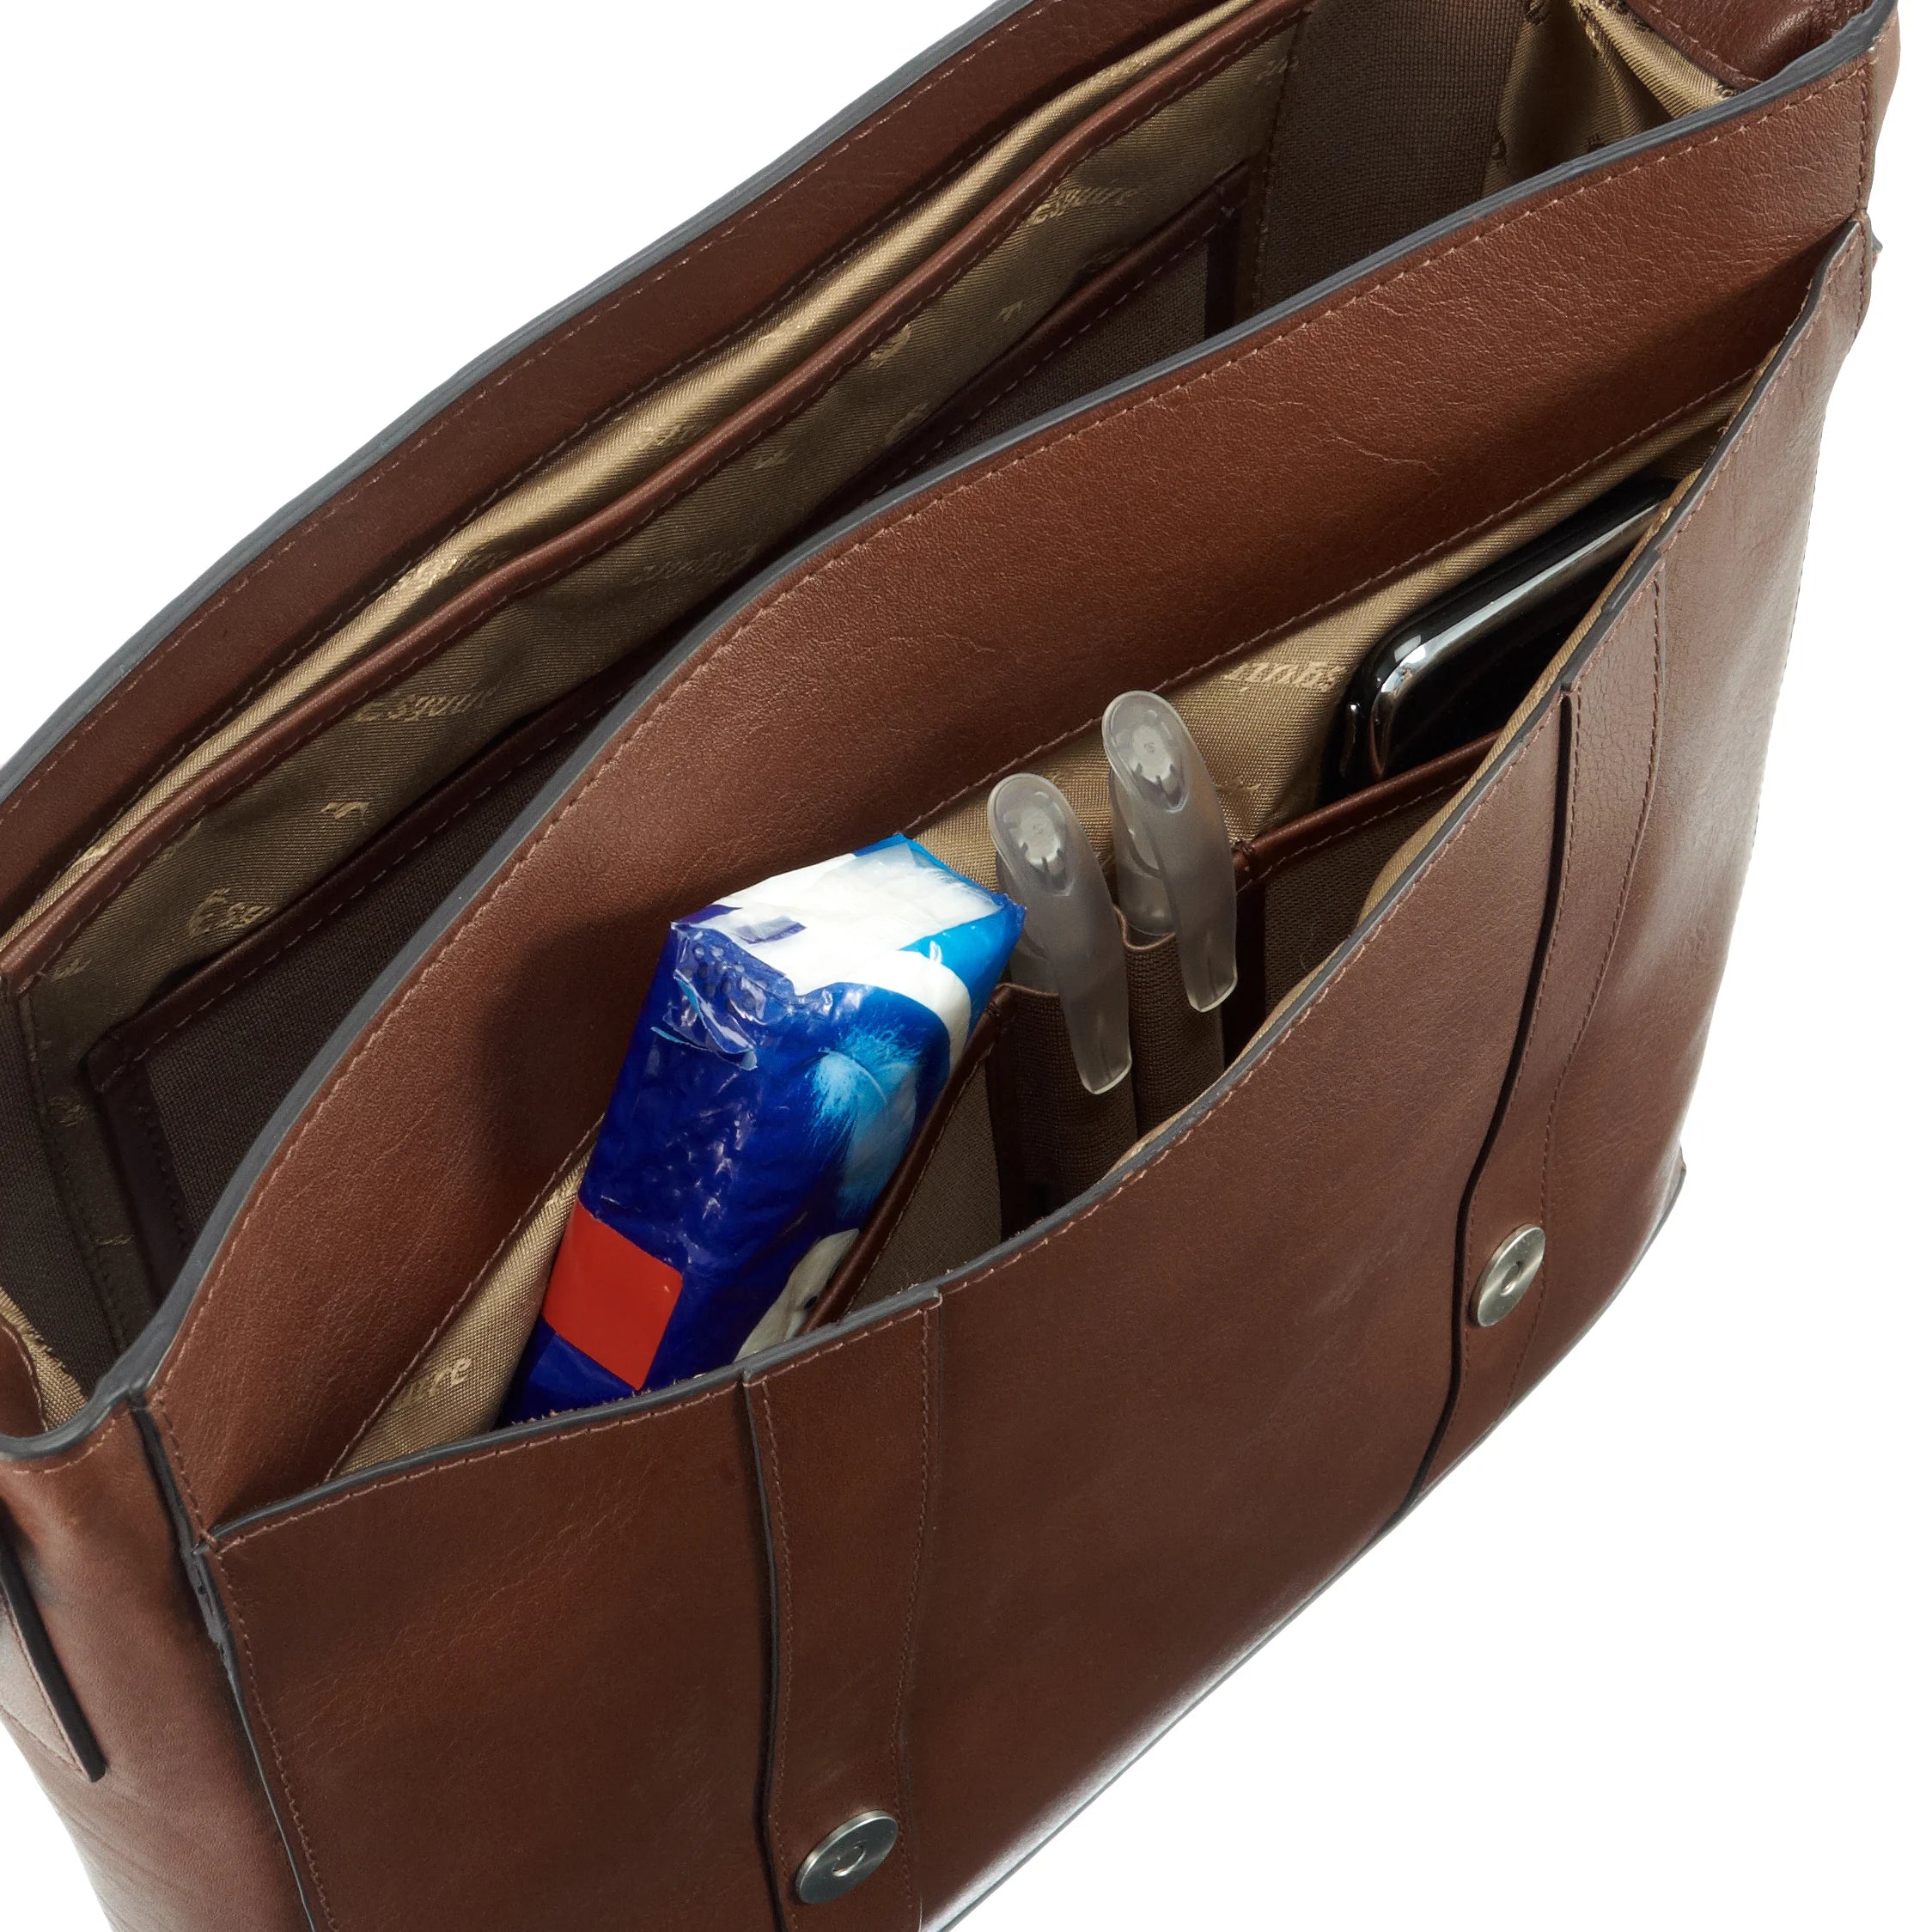 Esquire Vienna Bags shoulder bag with laptop compartment 30 cm - mocca